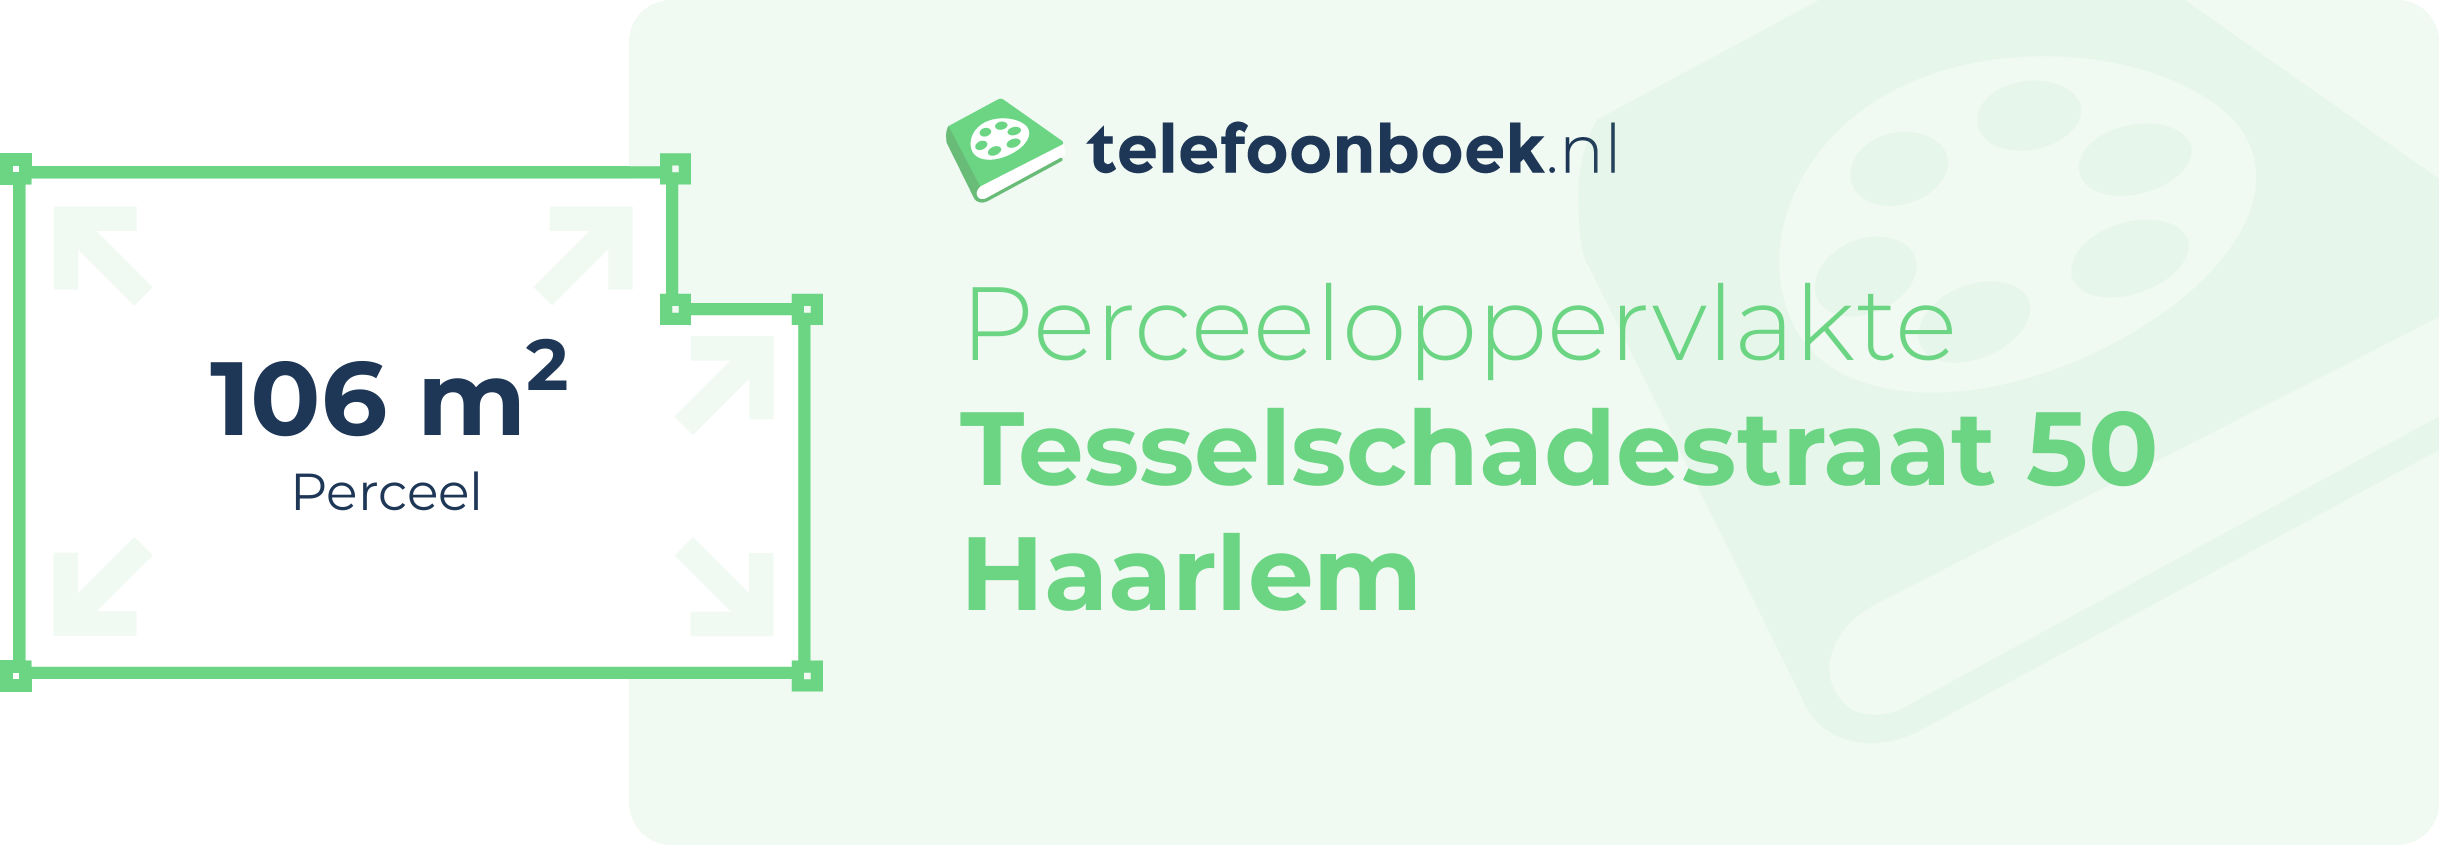 Perceeloppervlakte Tesselschadestraat 50 Haarlem